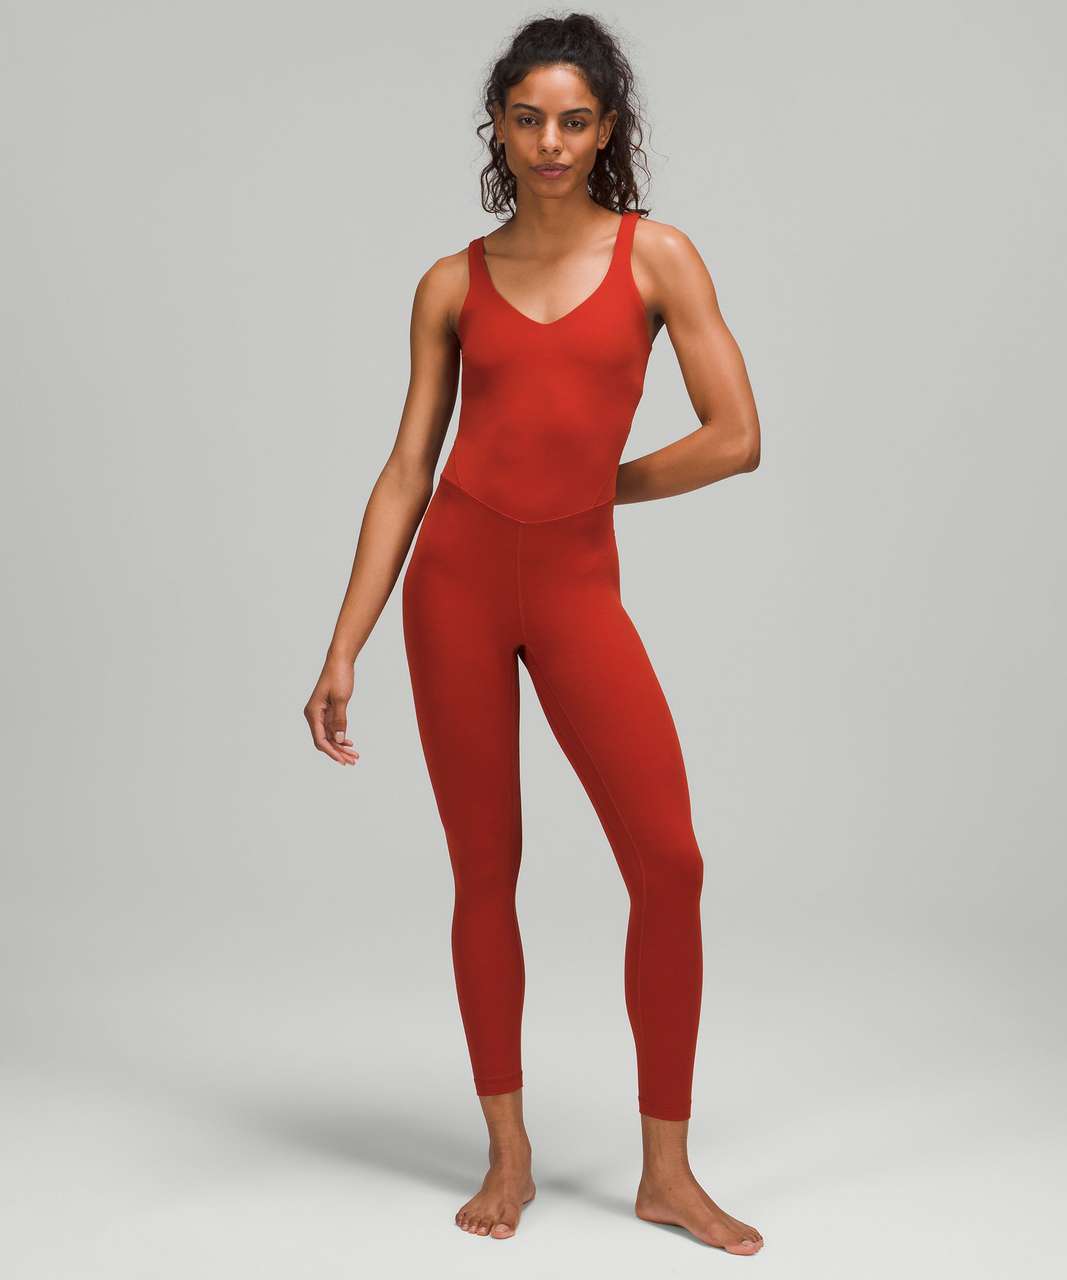 Another) align bodysuit - Cayenne : r/lululemon